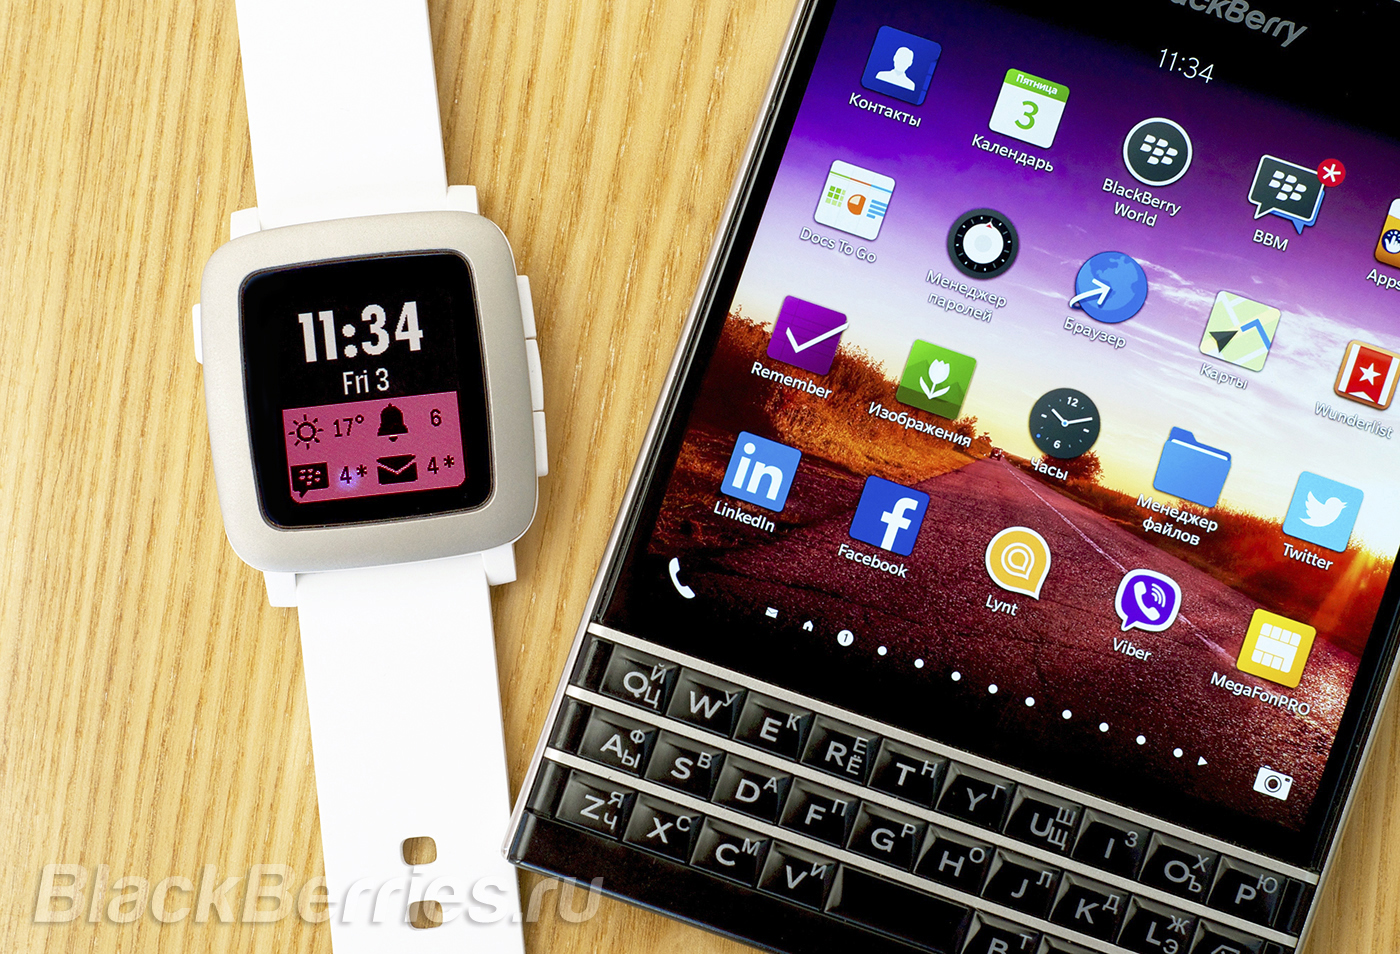 BlackBerry-Passport-Pebble-Time-54